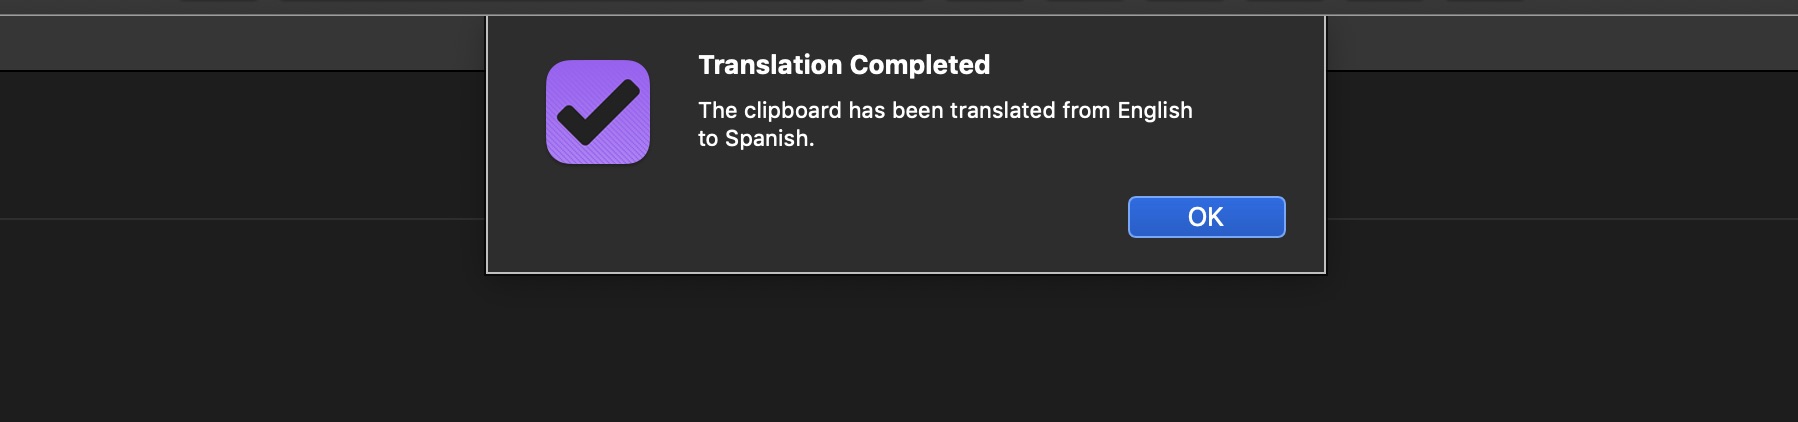 translate-clipboard-02